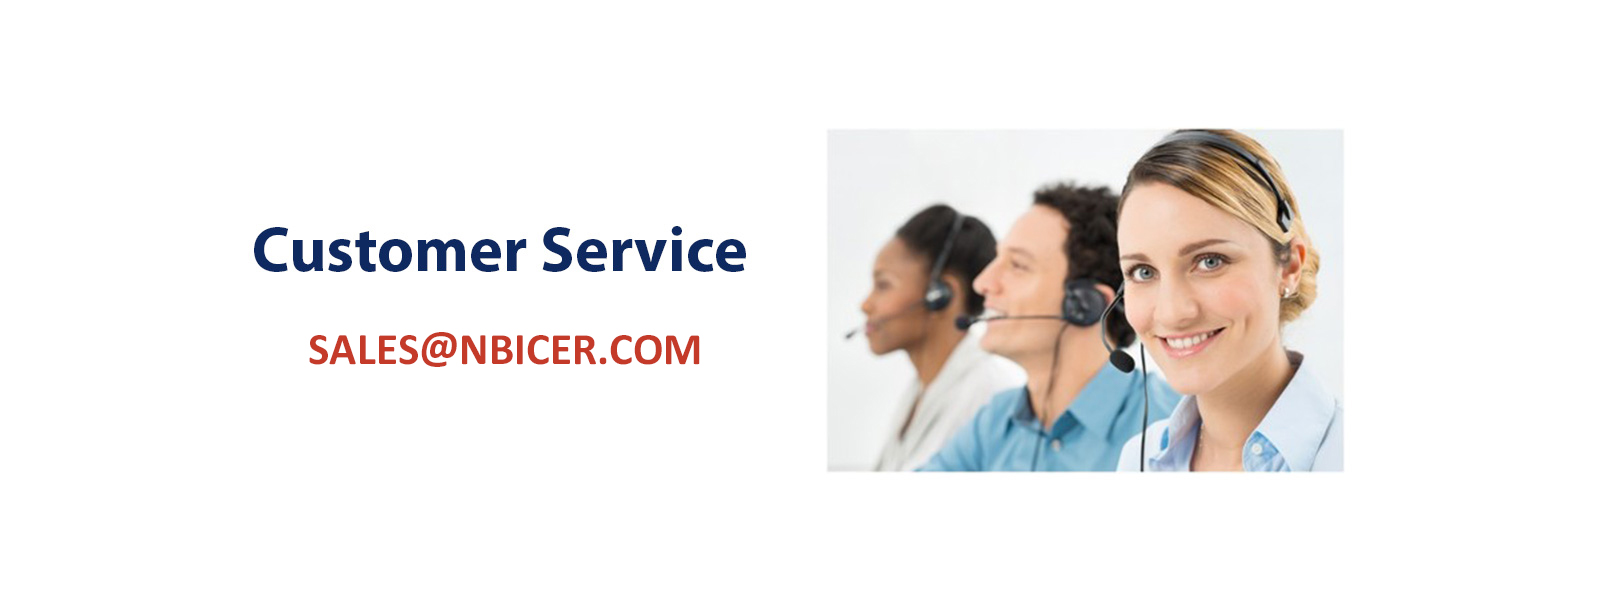 iGas USA Customer Service Contact  Number